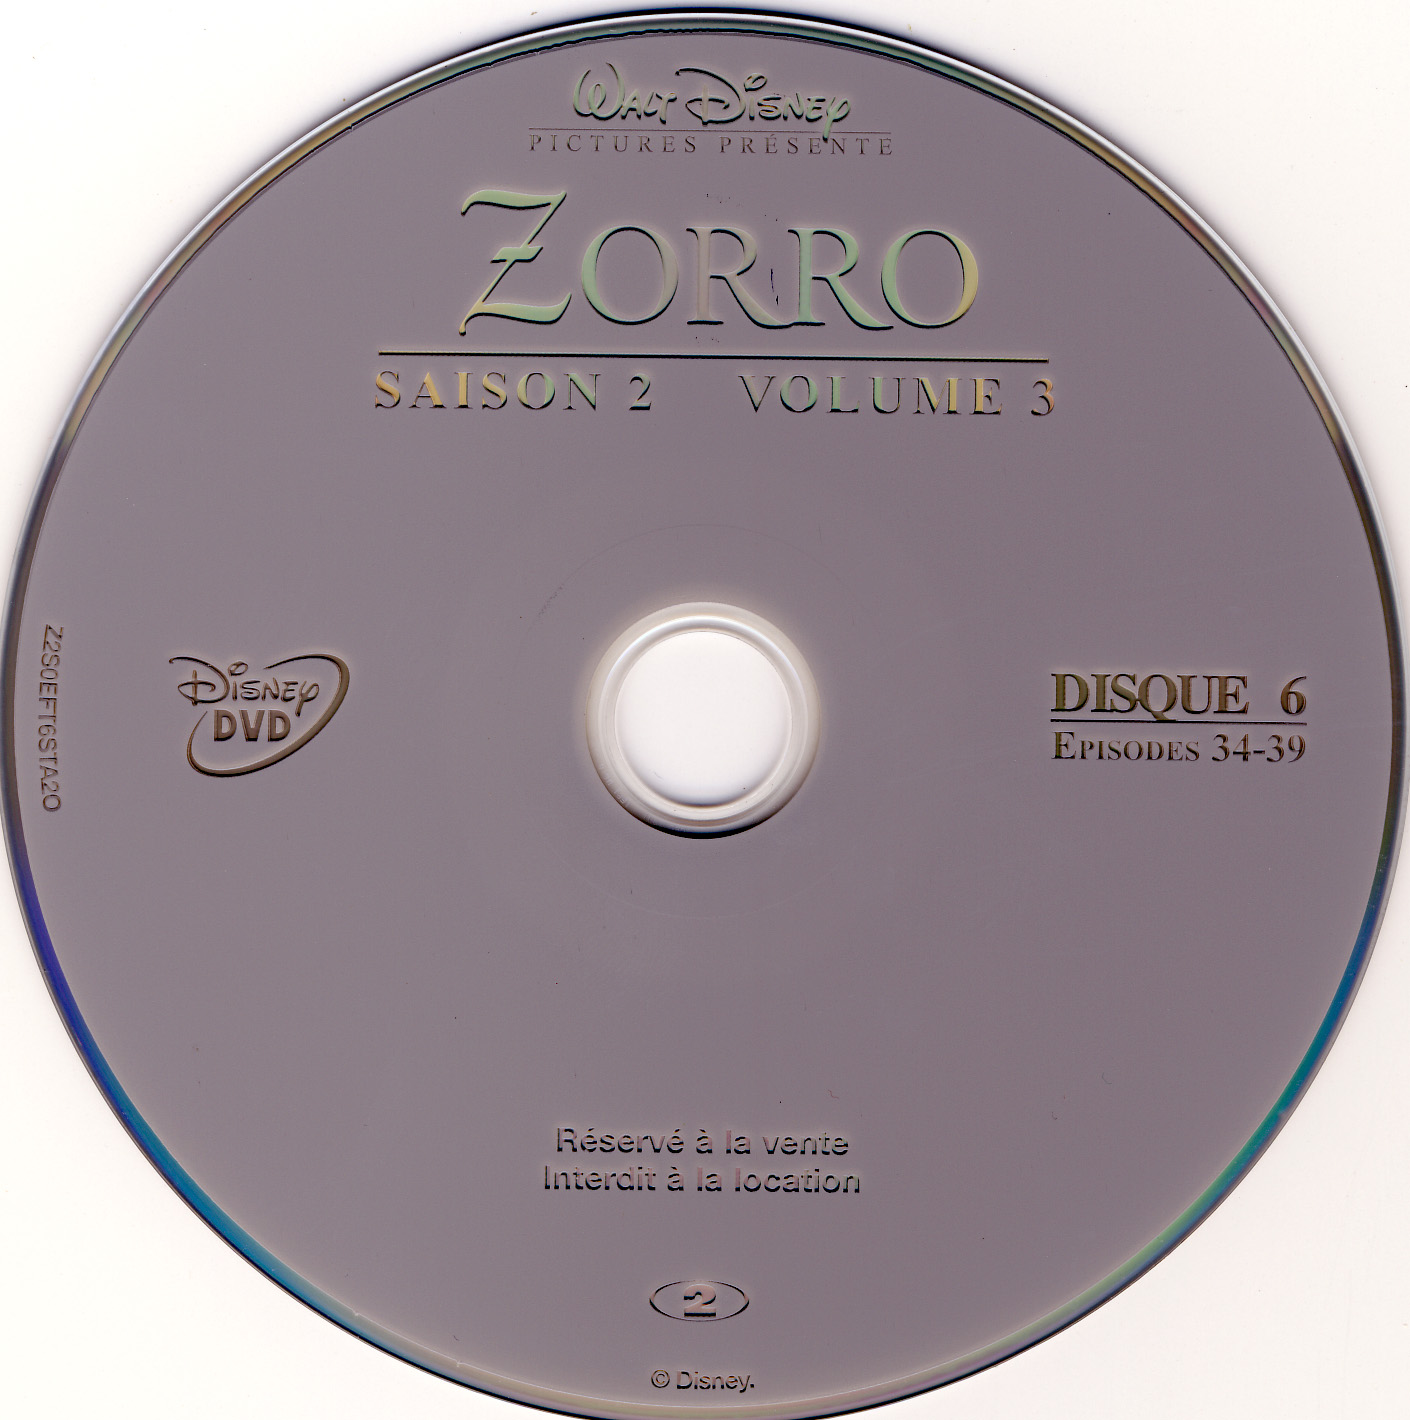 Zorro Saison 2 vol 3 DISC 6